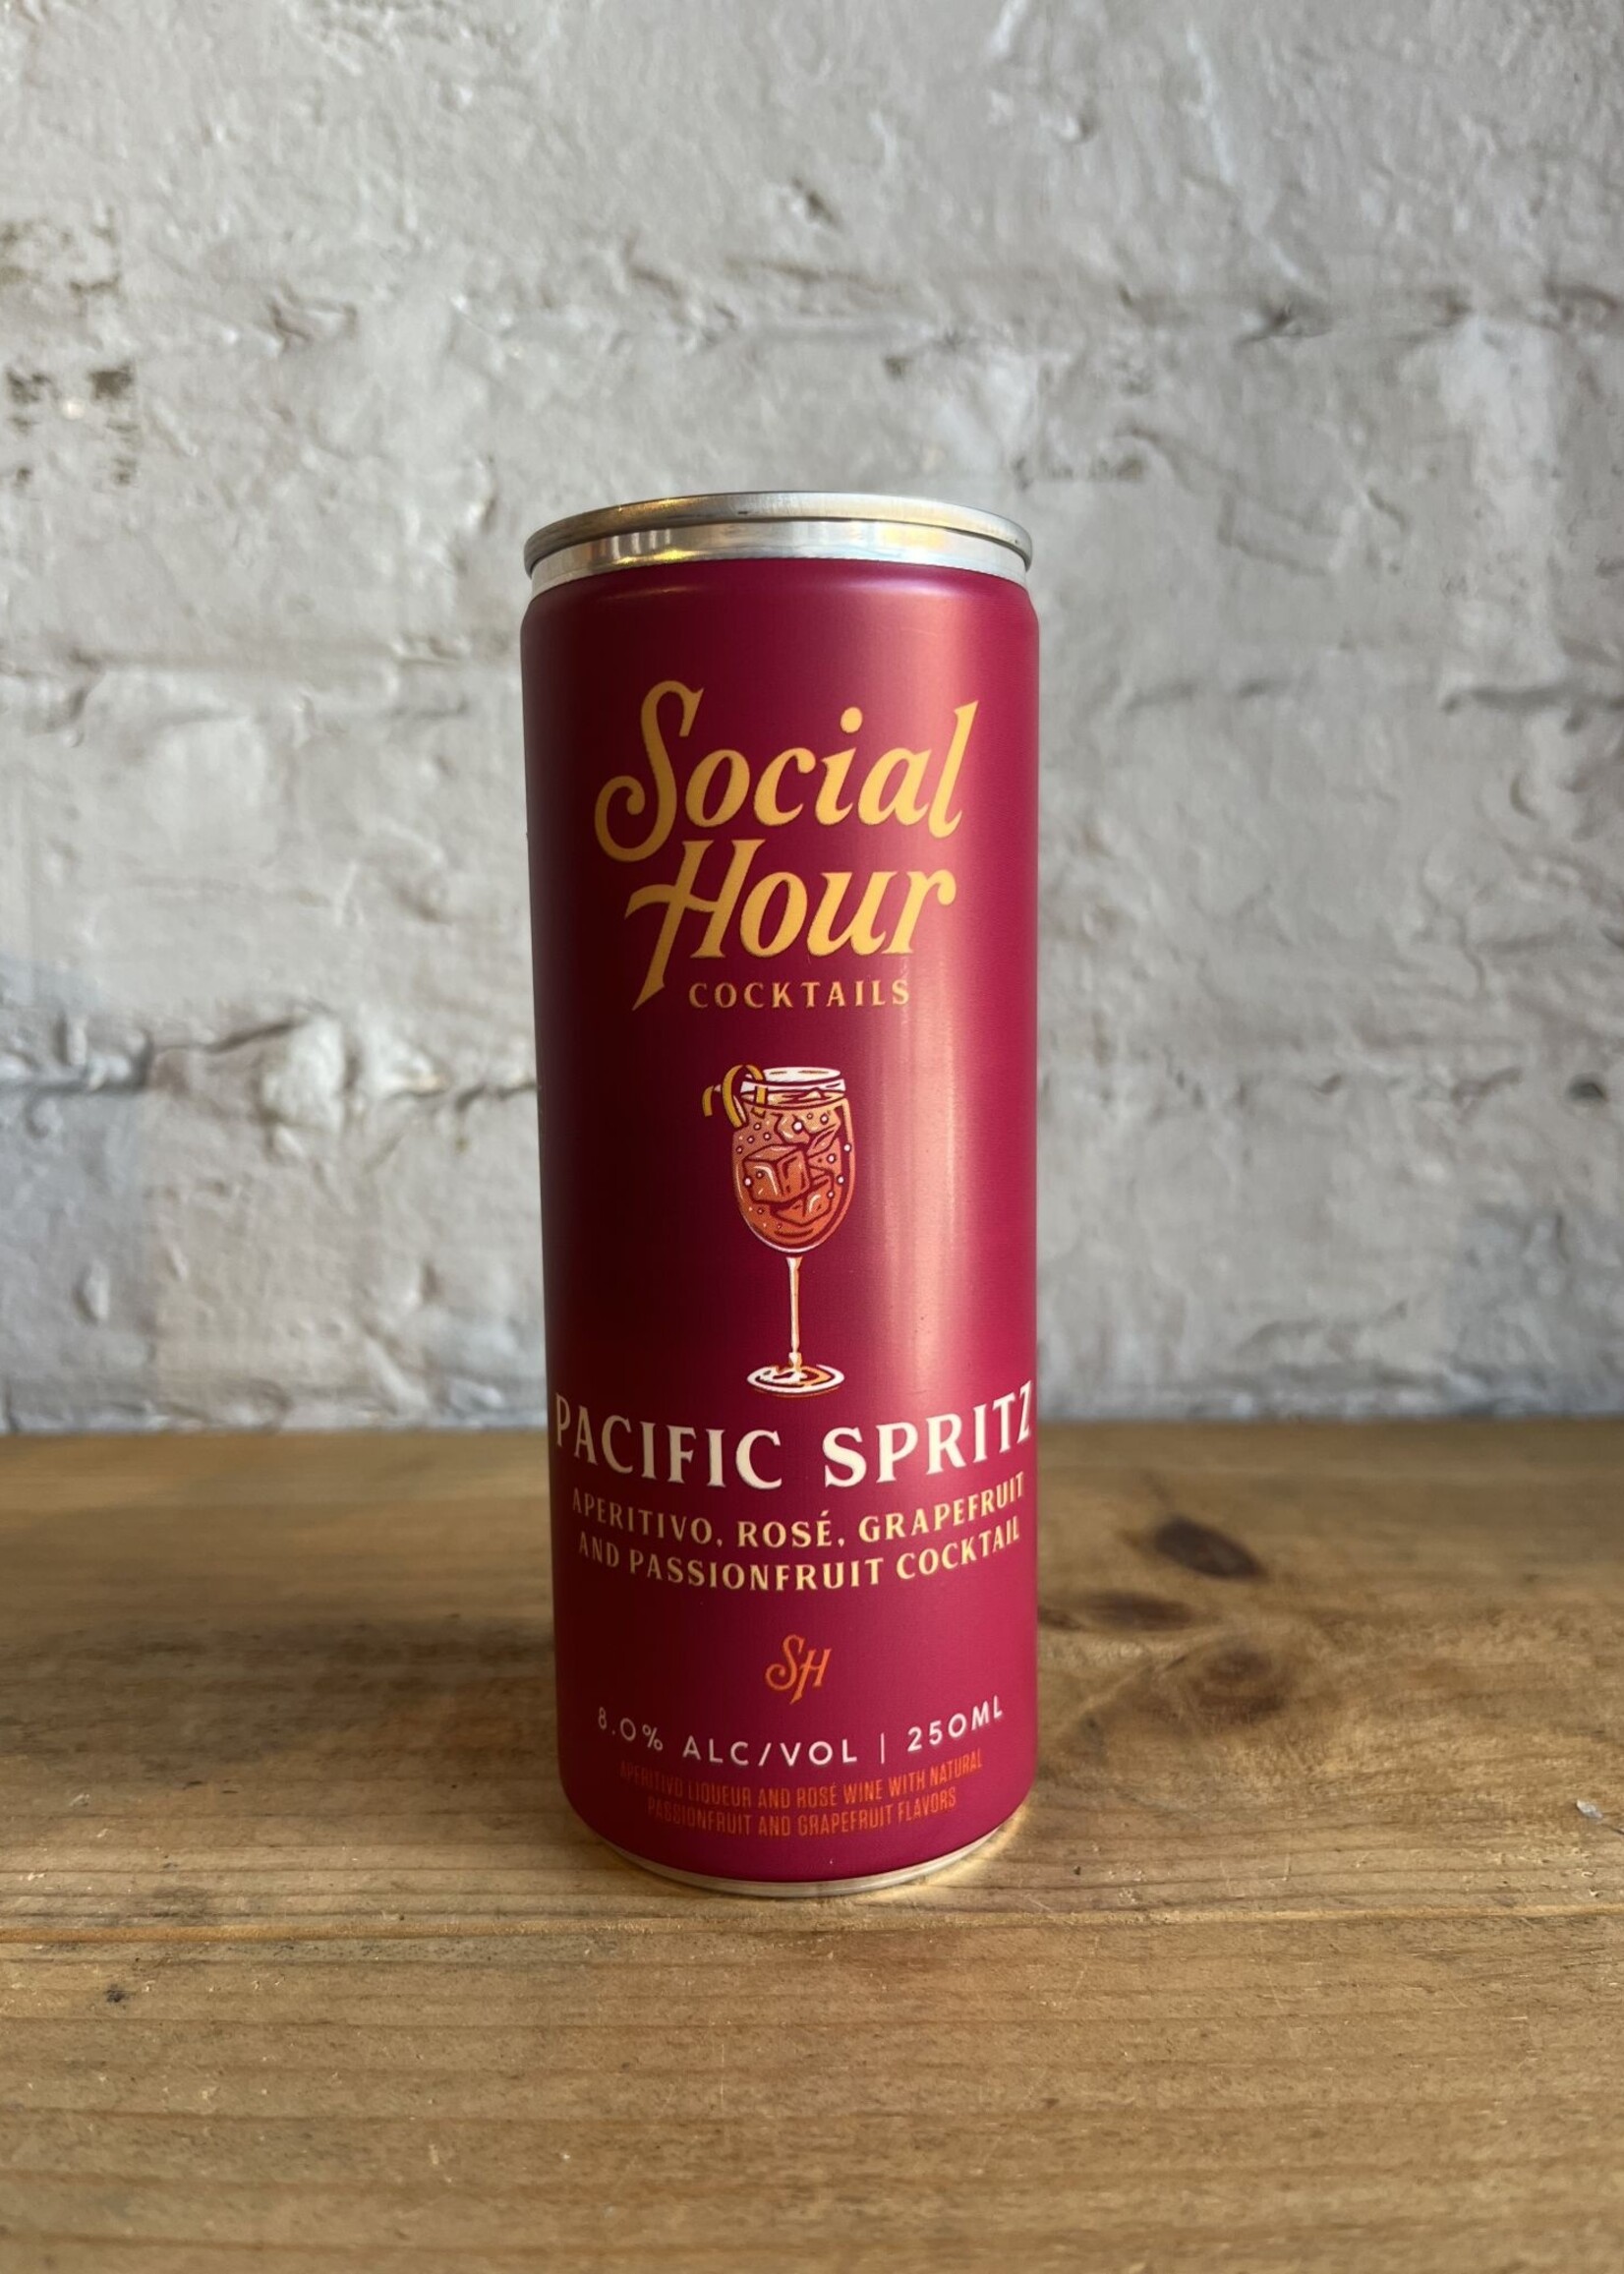 Social Hour Pacific Spritz - Brooklyn, NY (250ml)